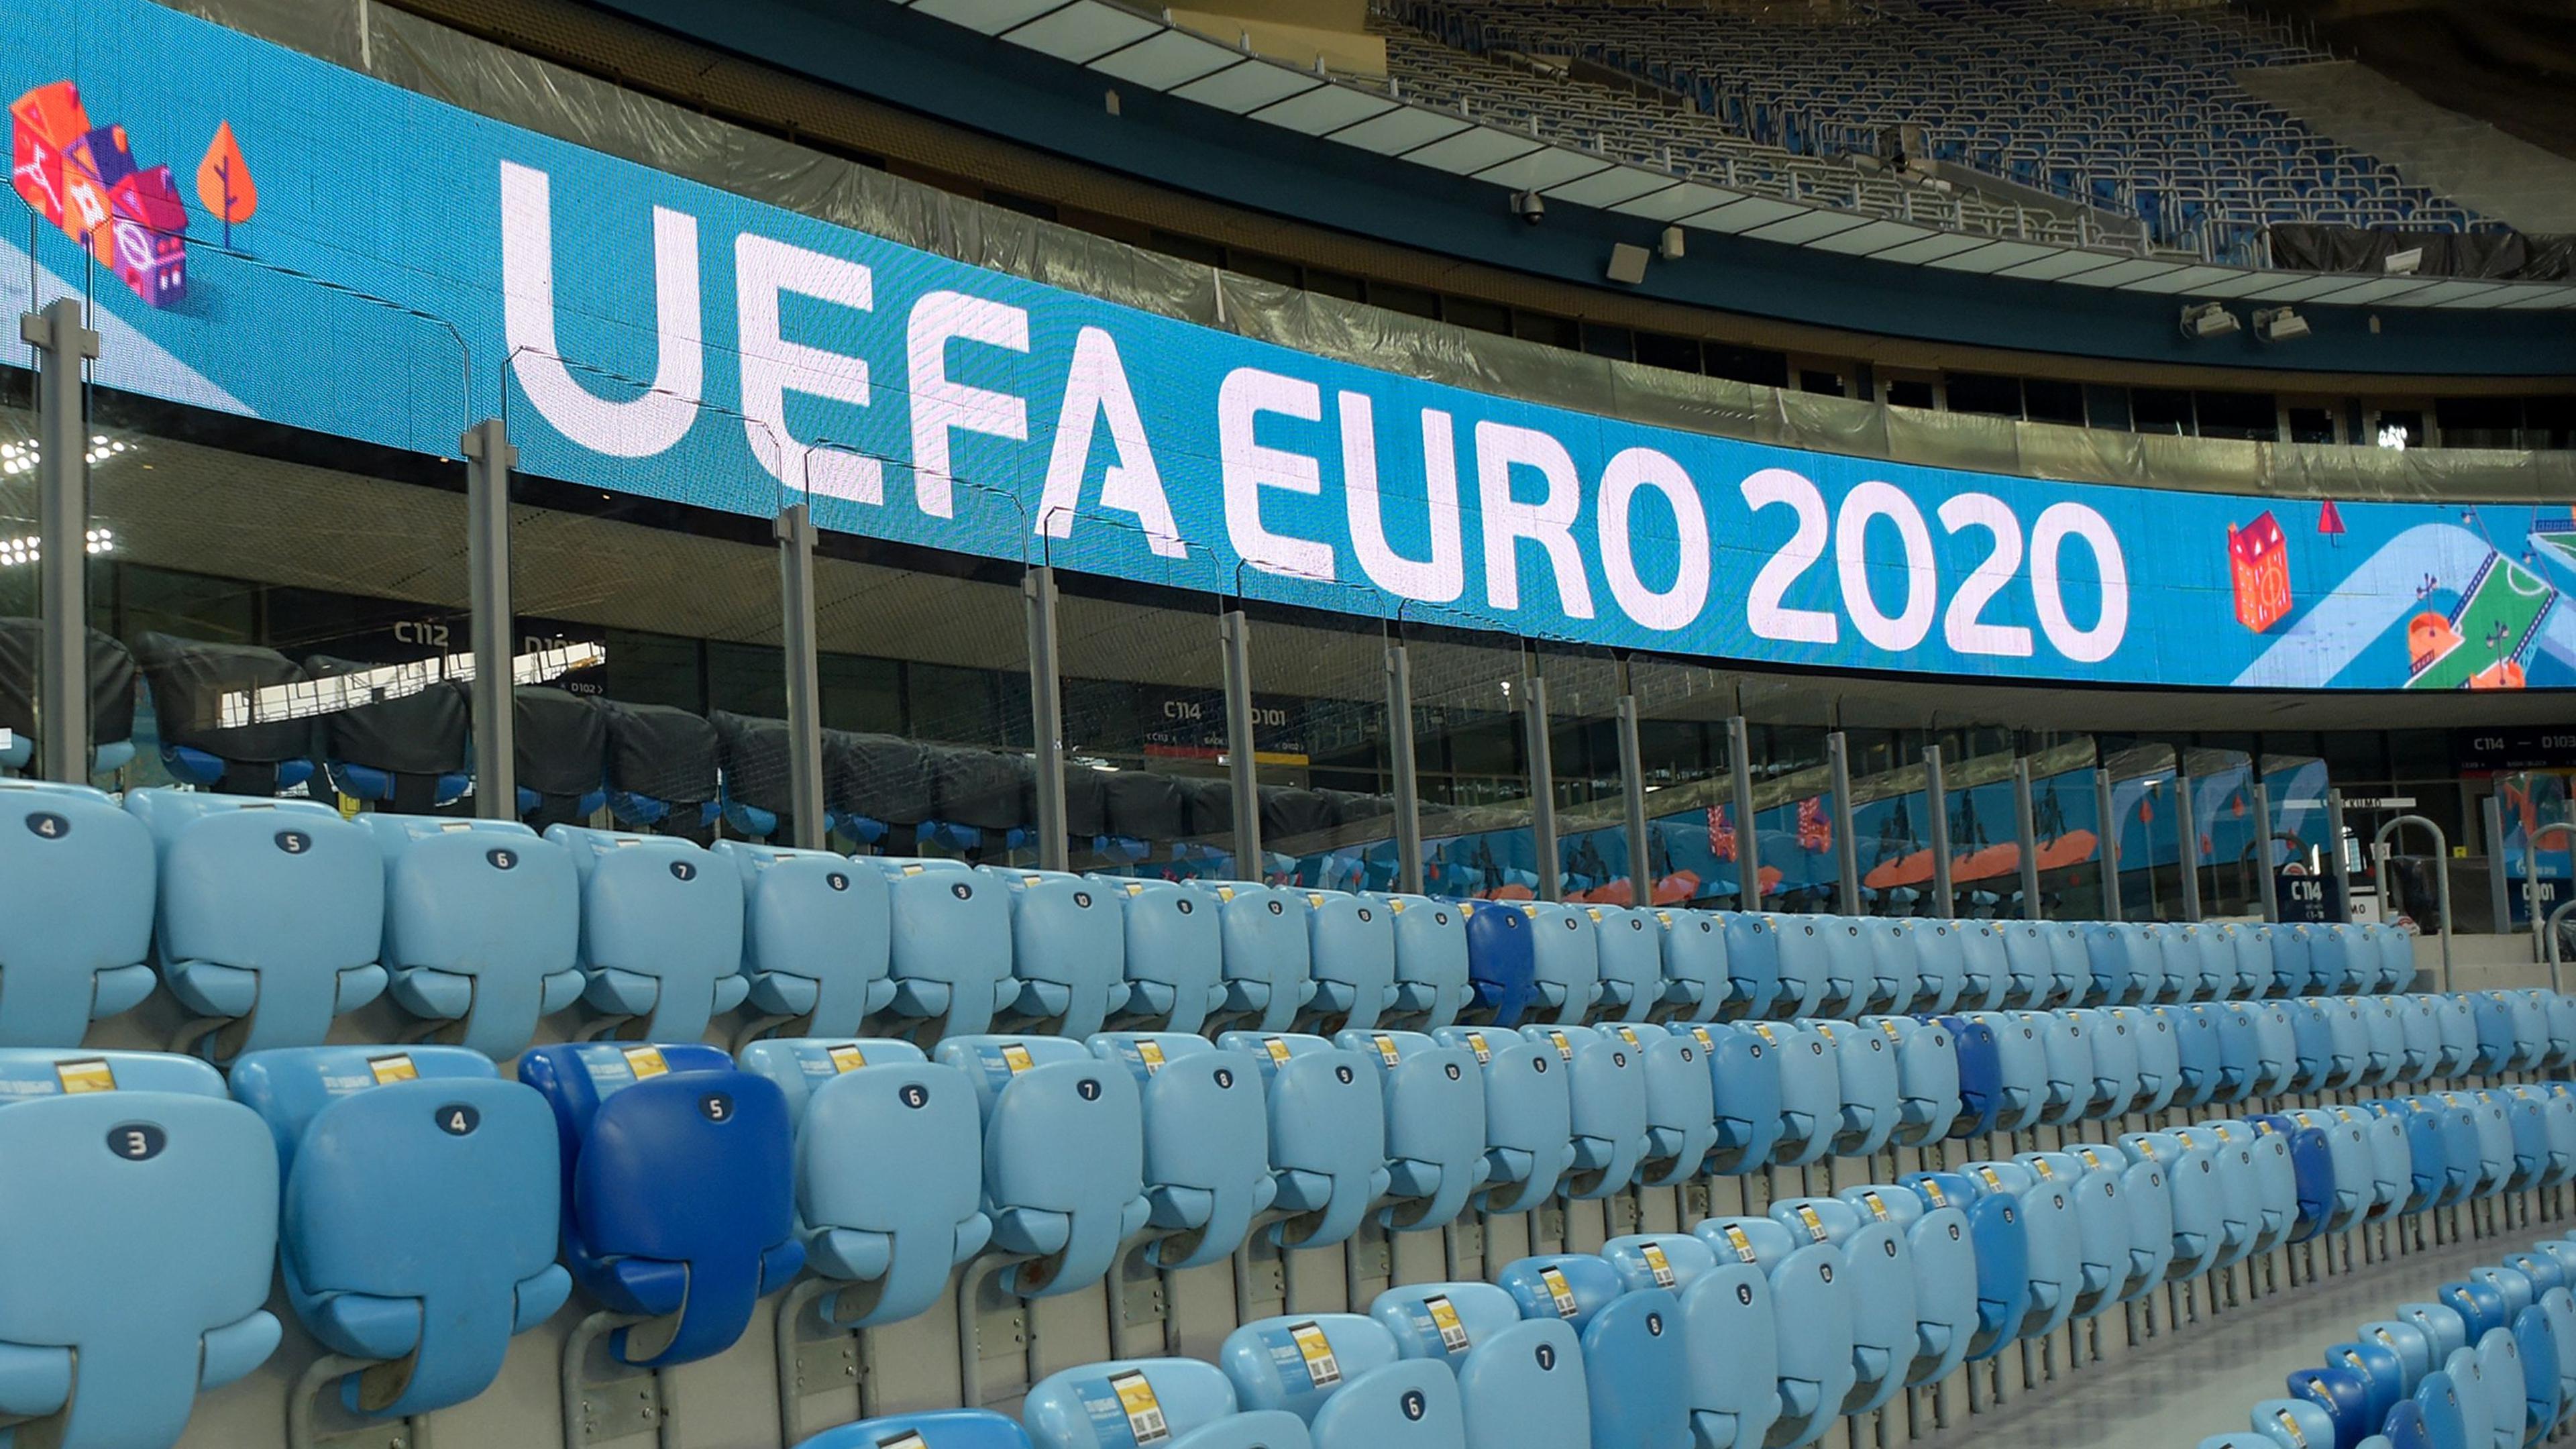 TVI transmite em sinal aberto 22 jogos do Euro 2020 - TVI Notícias